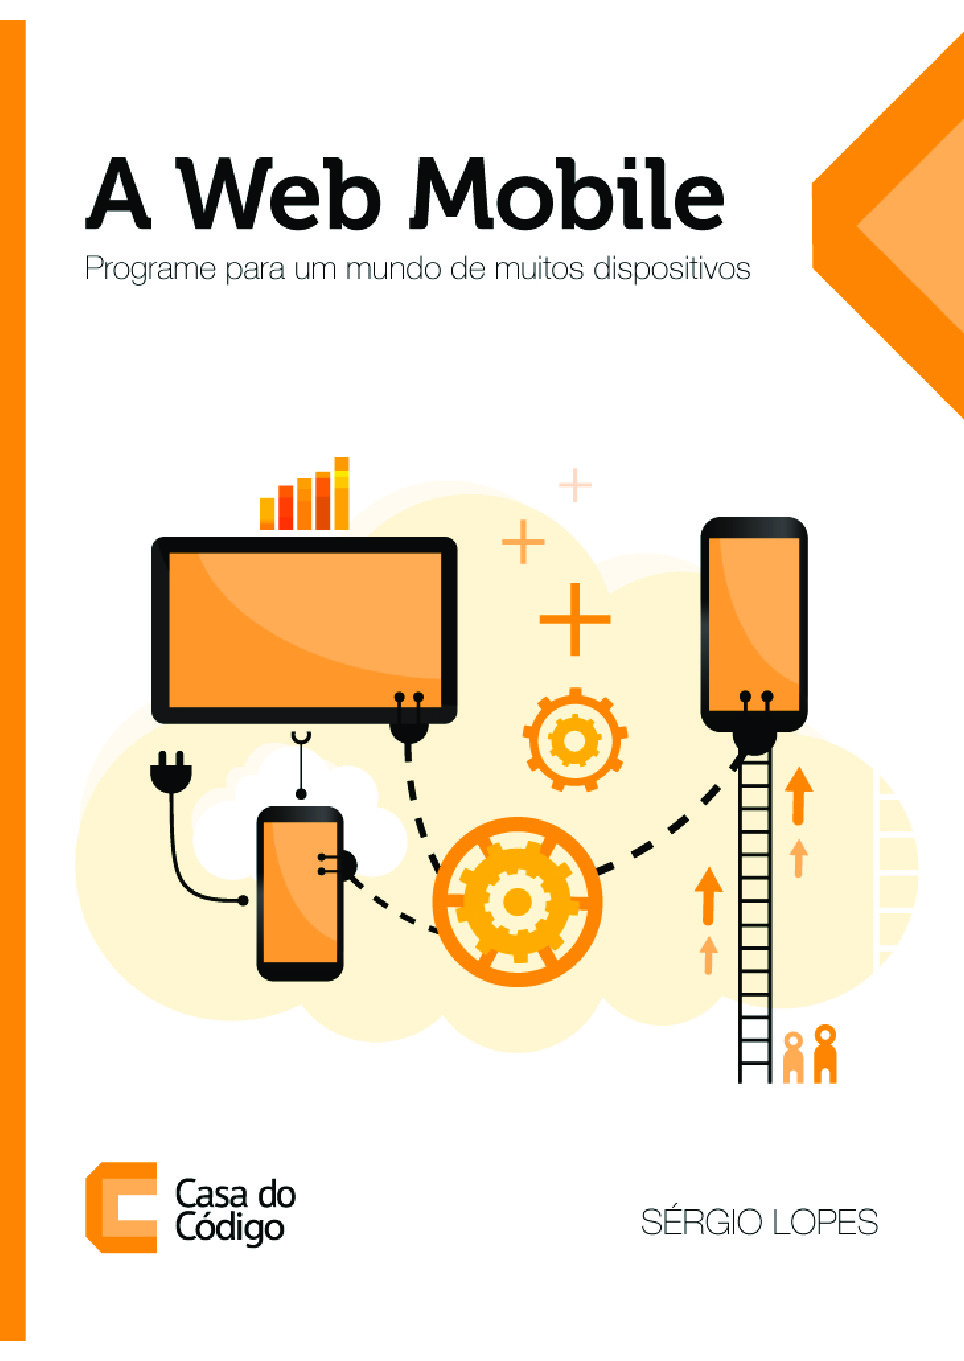 A Web Mobile